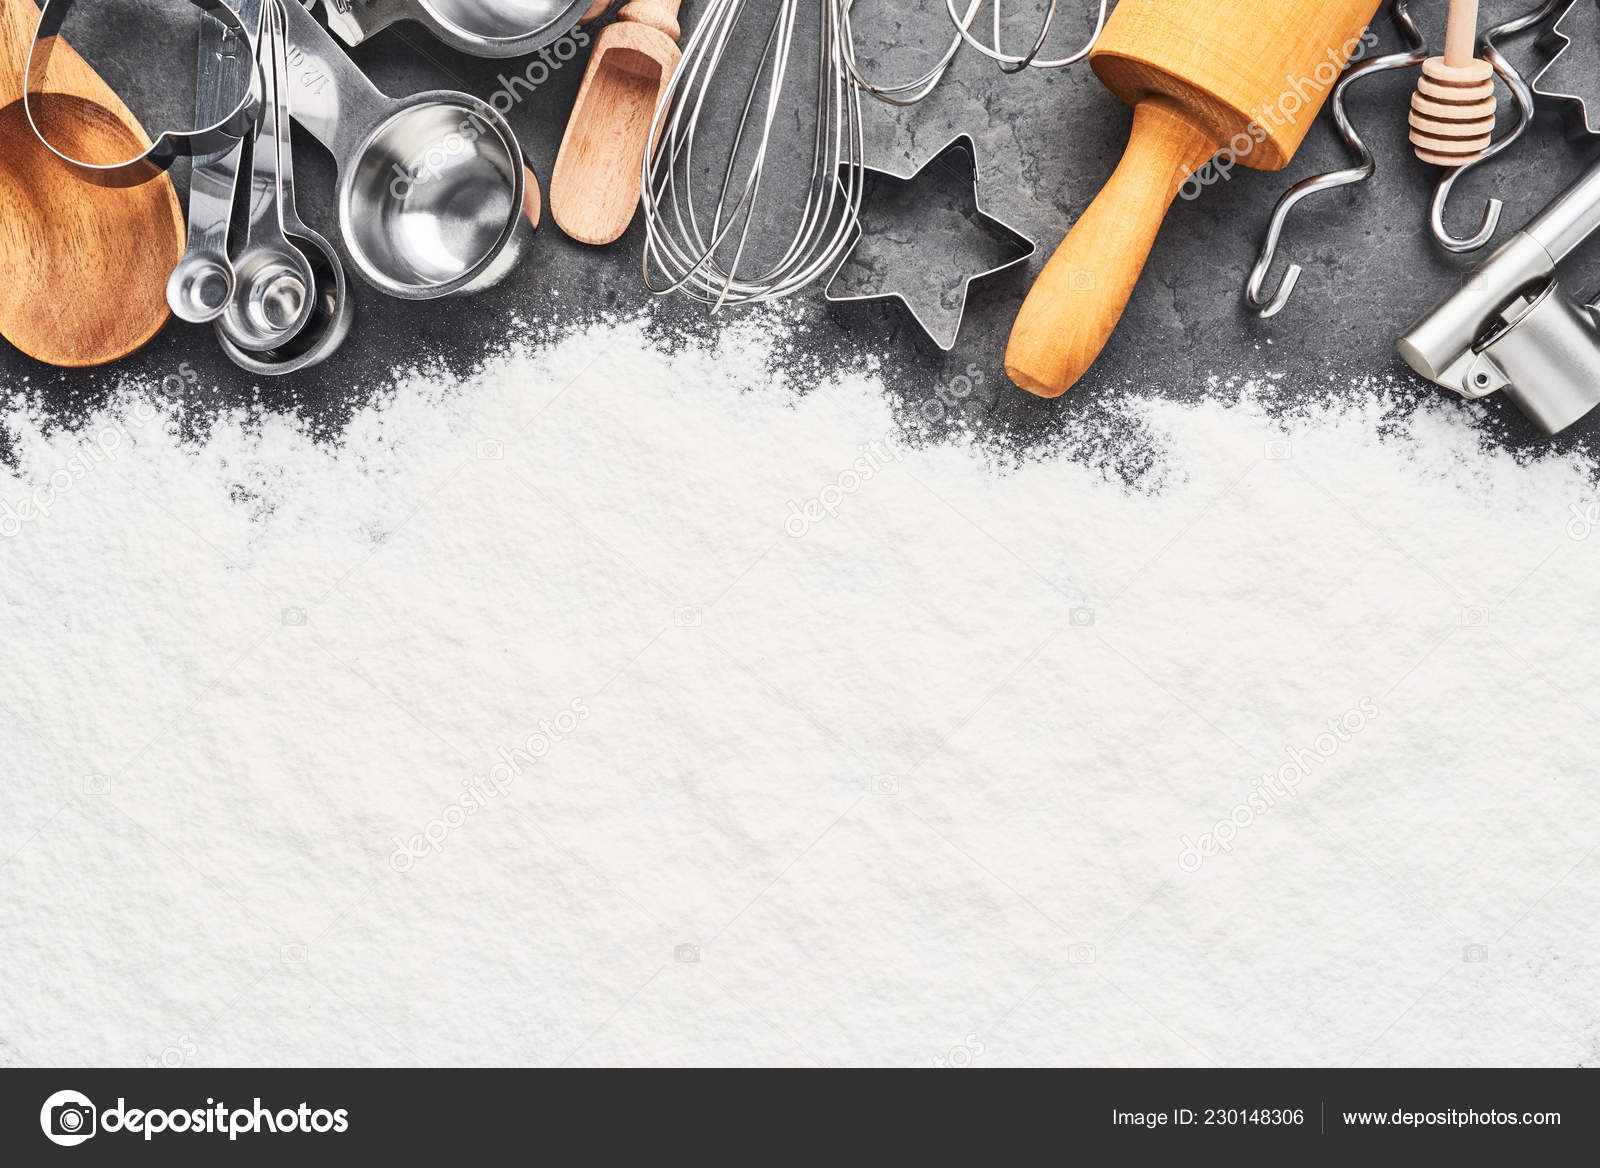 https://st4.depositphotos.com/15923508/23014/i/1600/depositphotos_230148306-stock-photo-kitchen-utensils-flour-baking-cooking.jpg